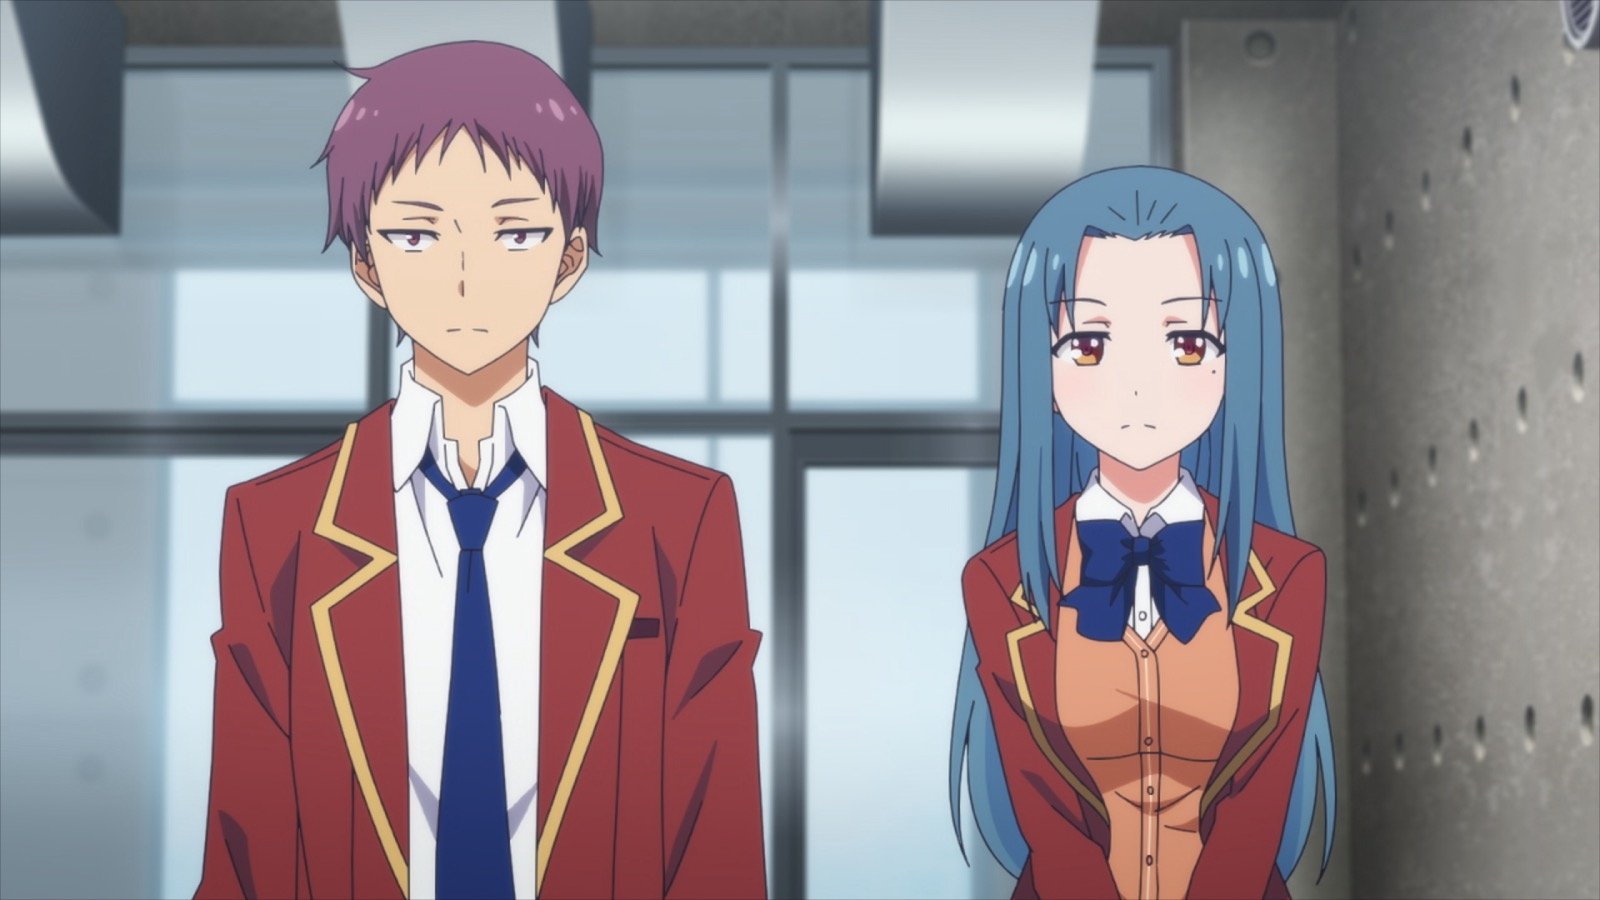 Animes In Japan 🎄 on X: INFO Confira a prévia do 1° episódio da 2ª  temporada do anime Classroom of the Elite (Youkoso Jitsuryoku Shijou Shugi  no Kyoushitsu e). 📌 Será transmitido